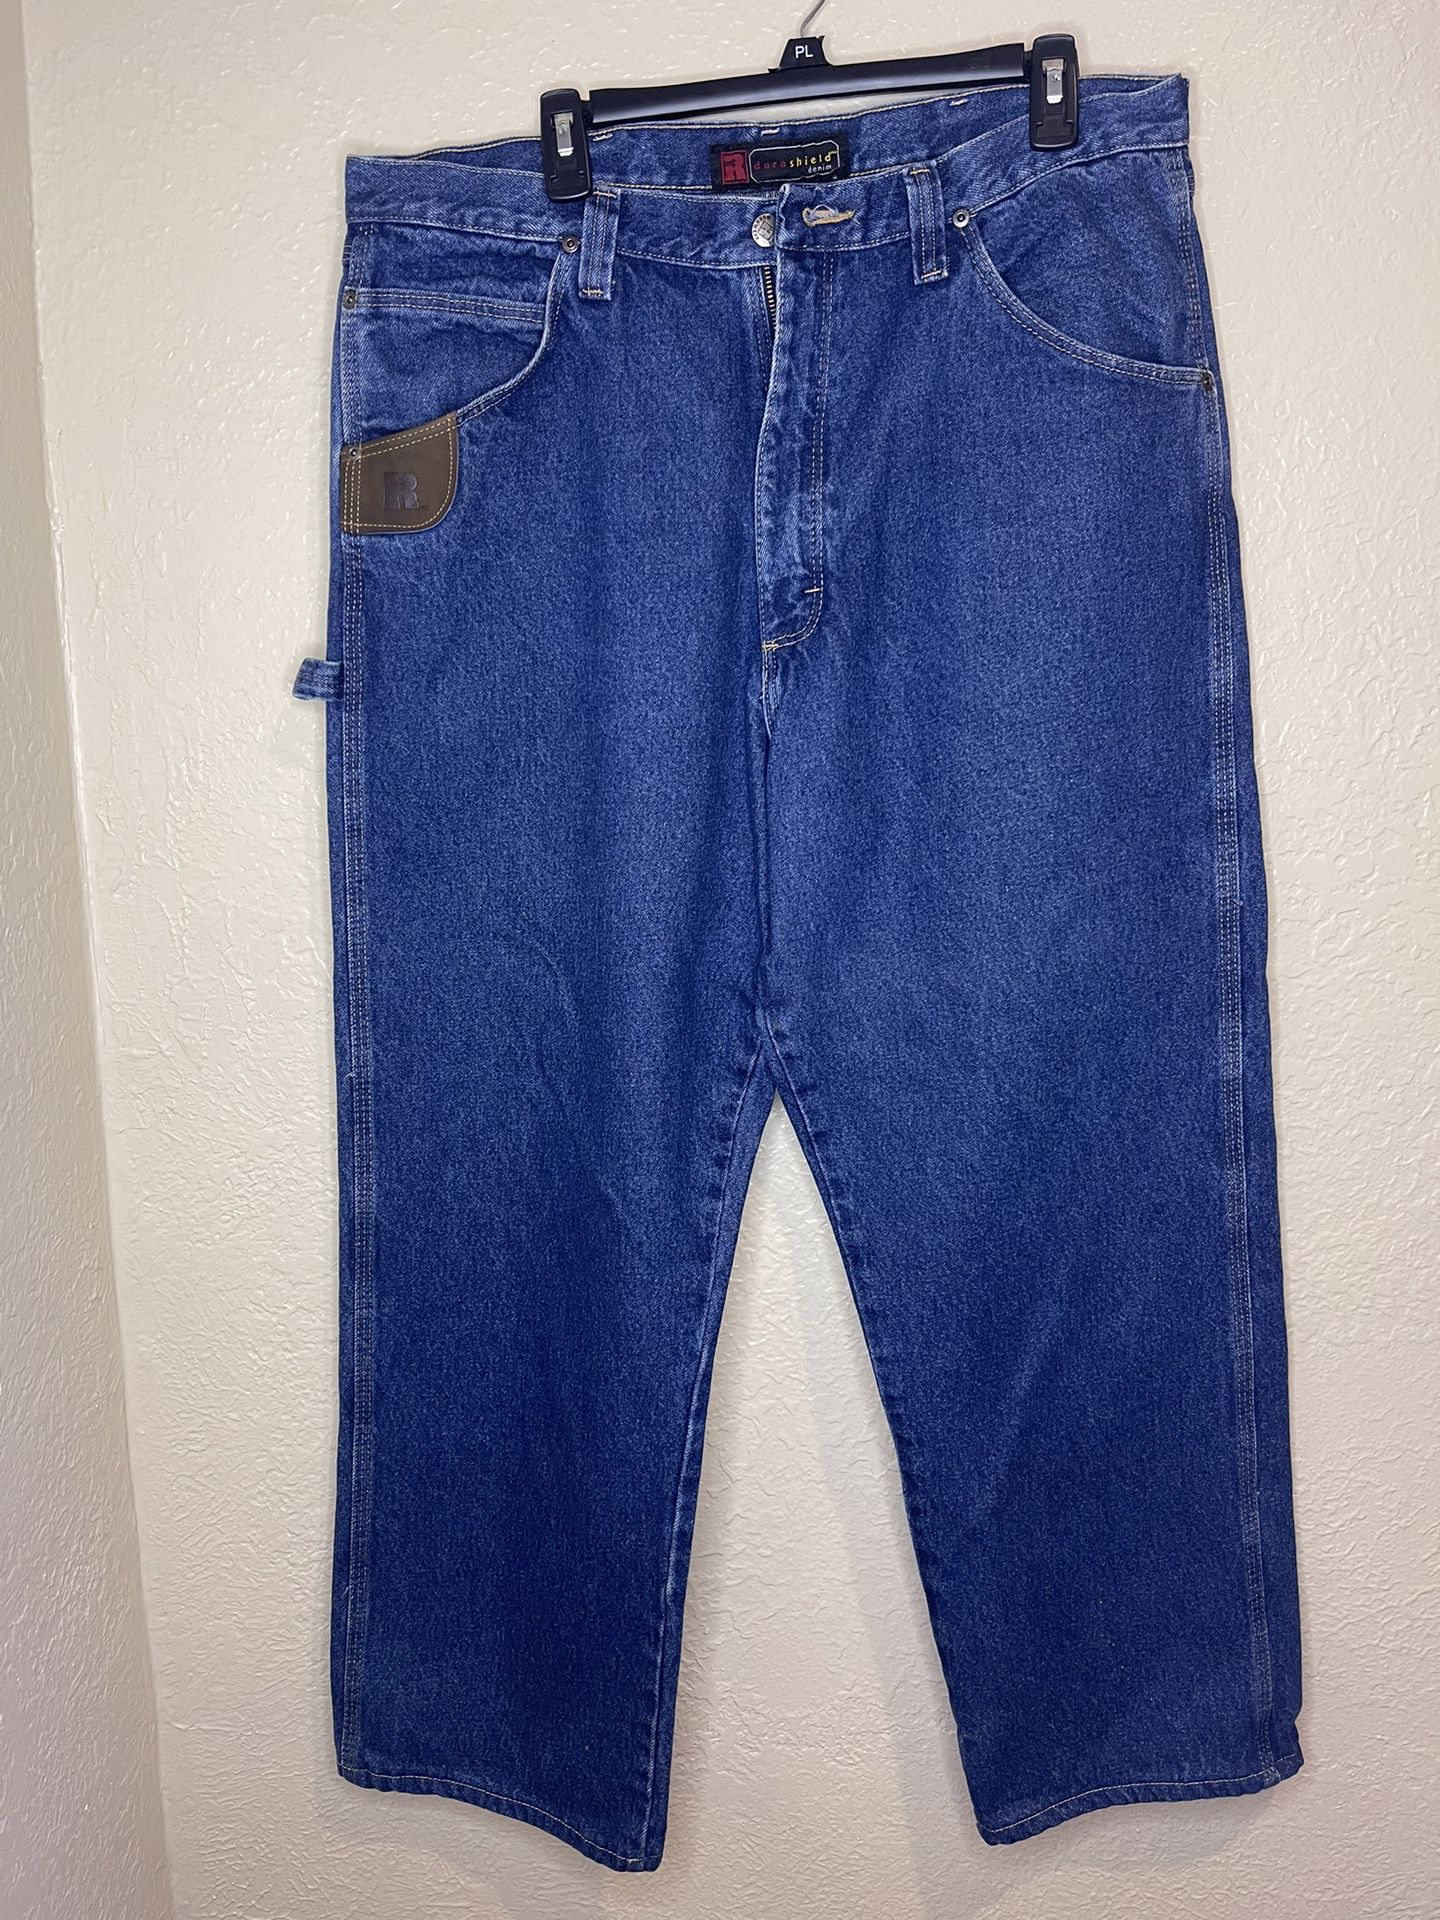 Riggs Workwear Dura Shield Denim Carpenter Jeans - Men's 38 X 36